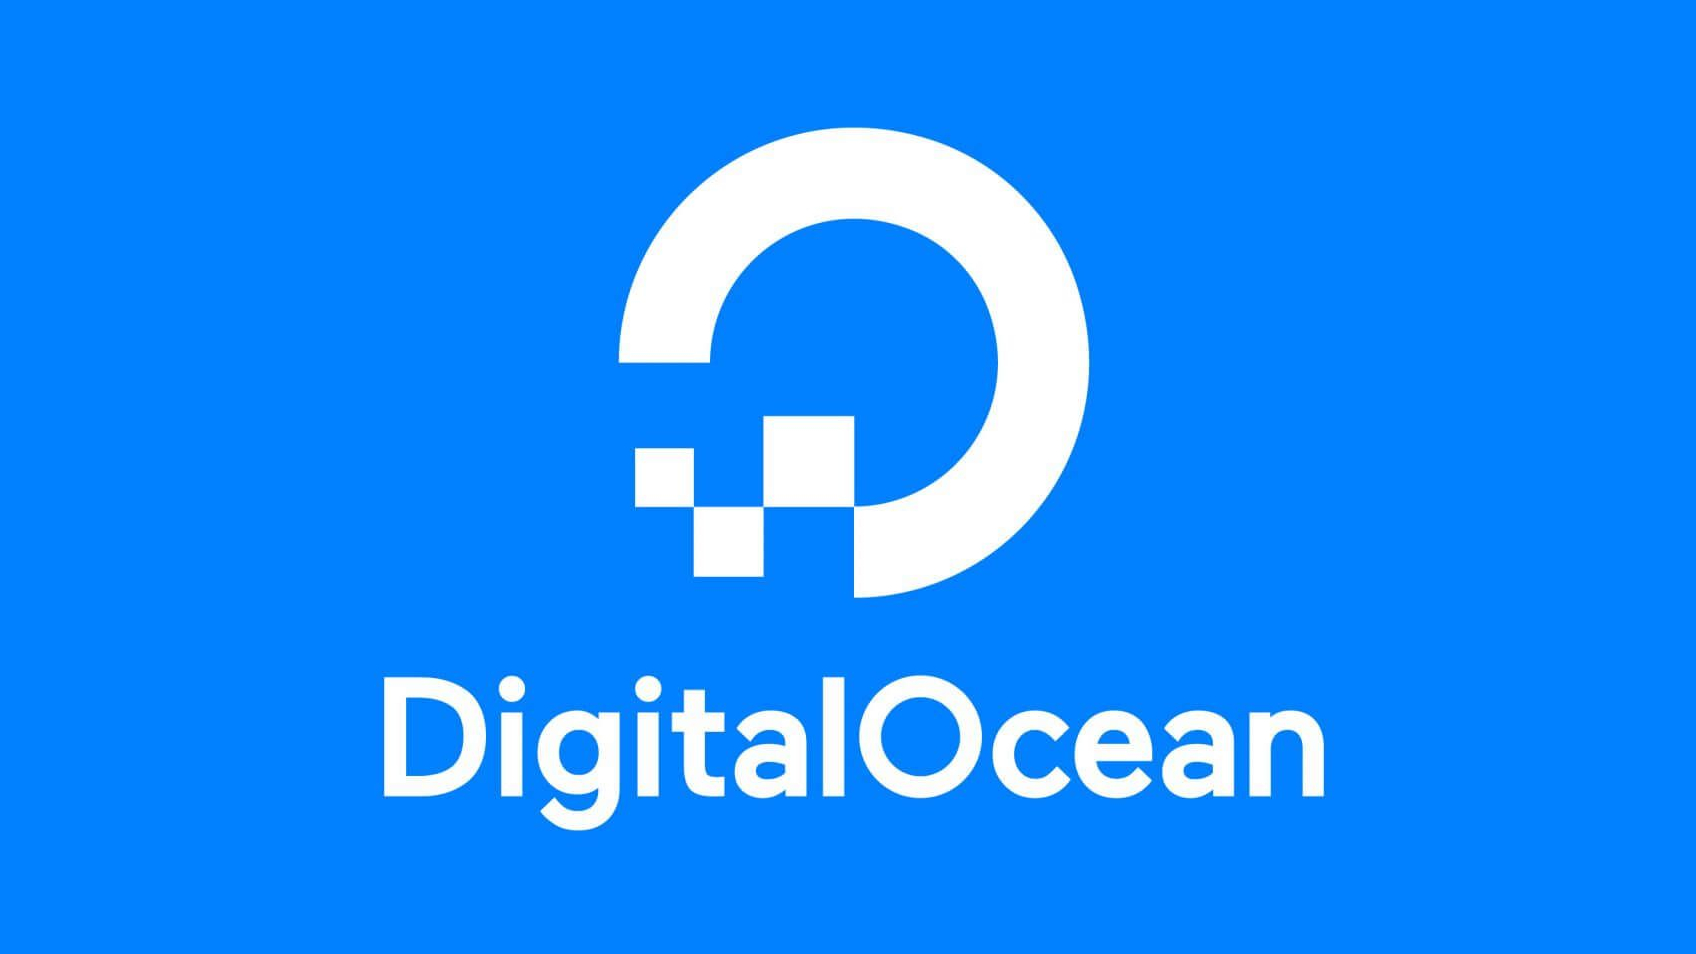 White DigitalOcean logo on a blue background